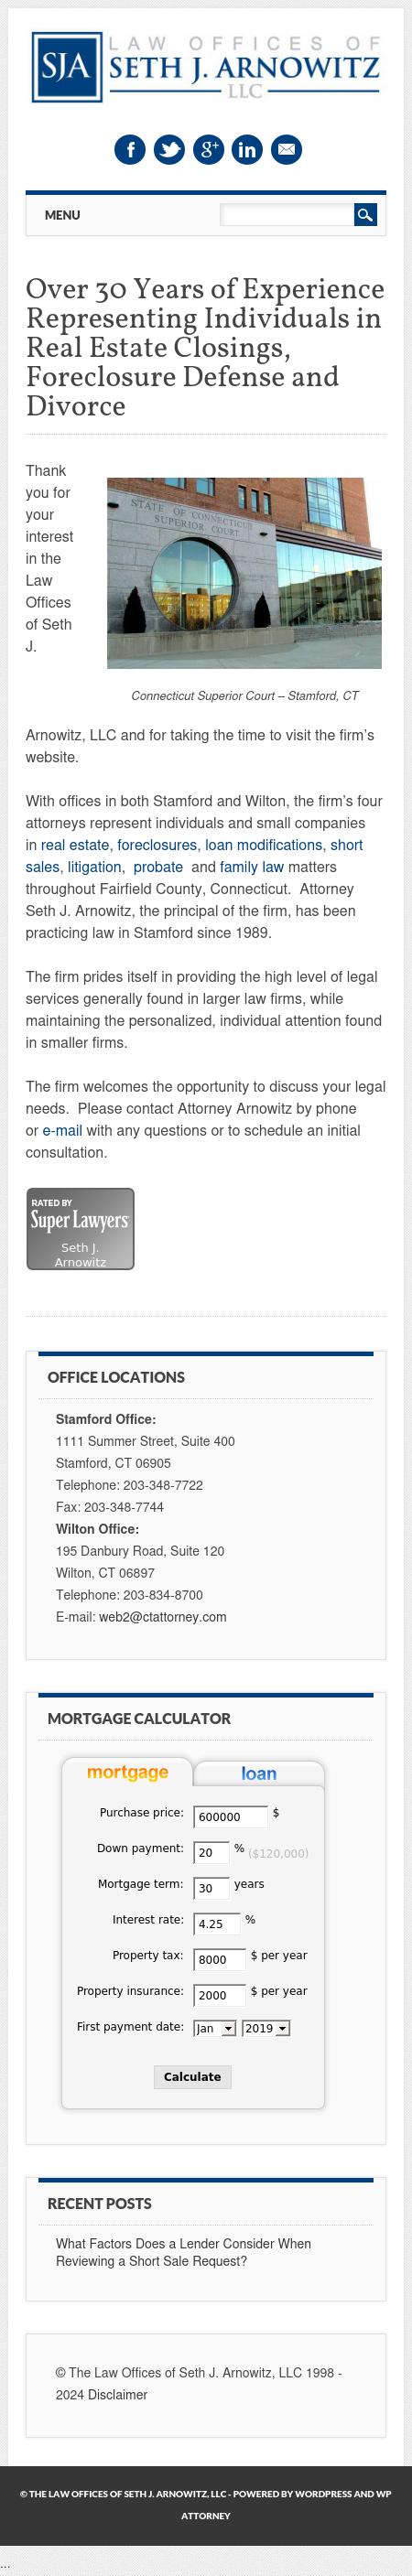 Law Offices of Seth J. Arnowitz LLC - Stamford CT Lawyers